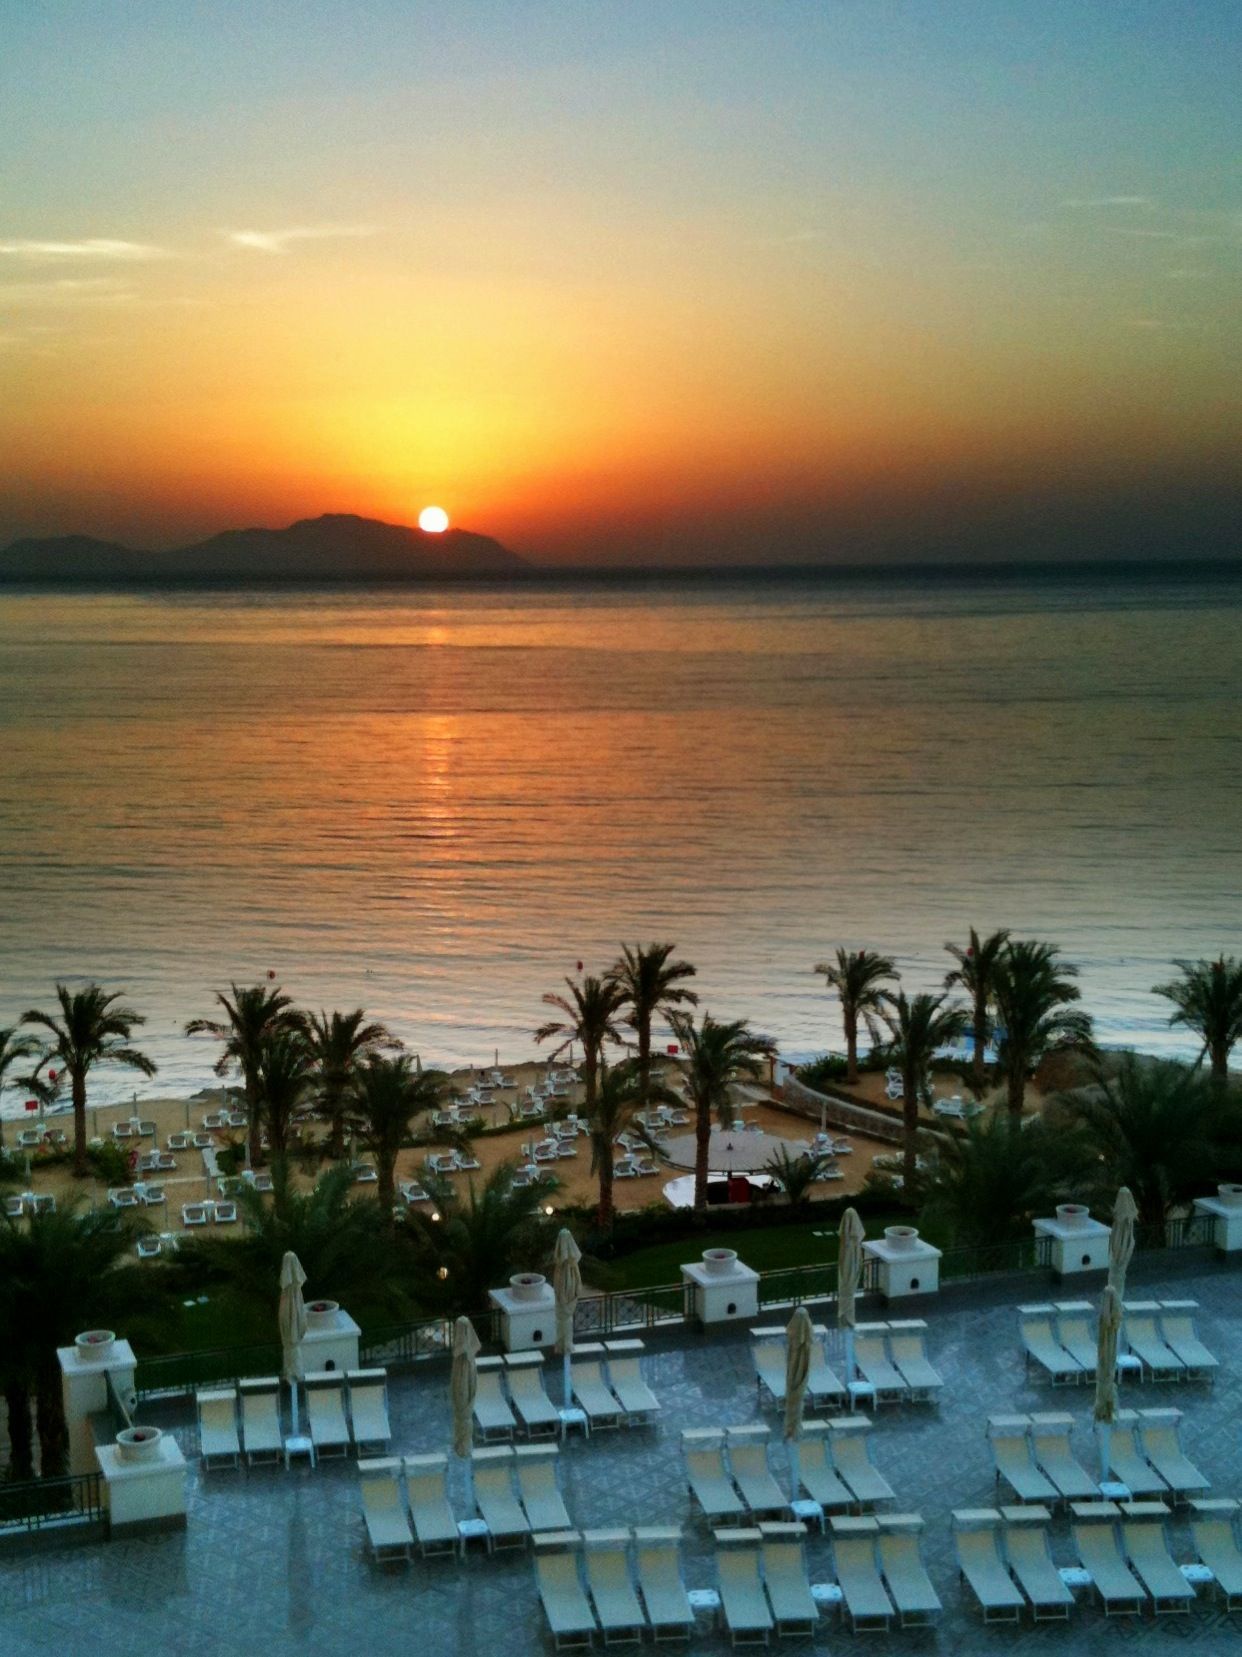 Day 10 – Sunrise over Sharm